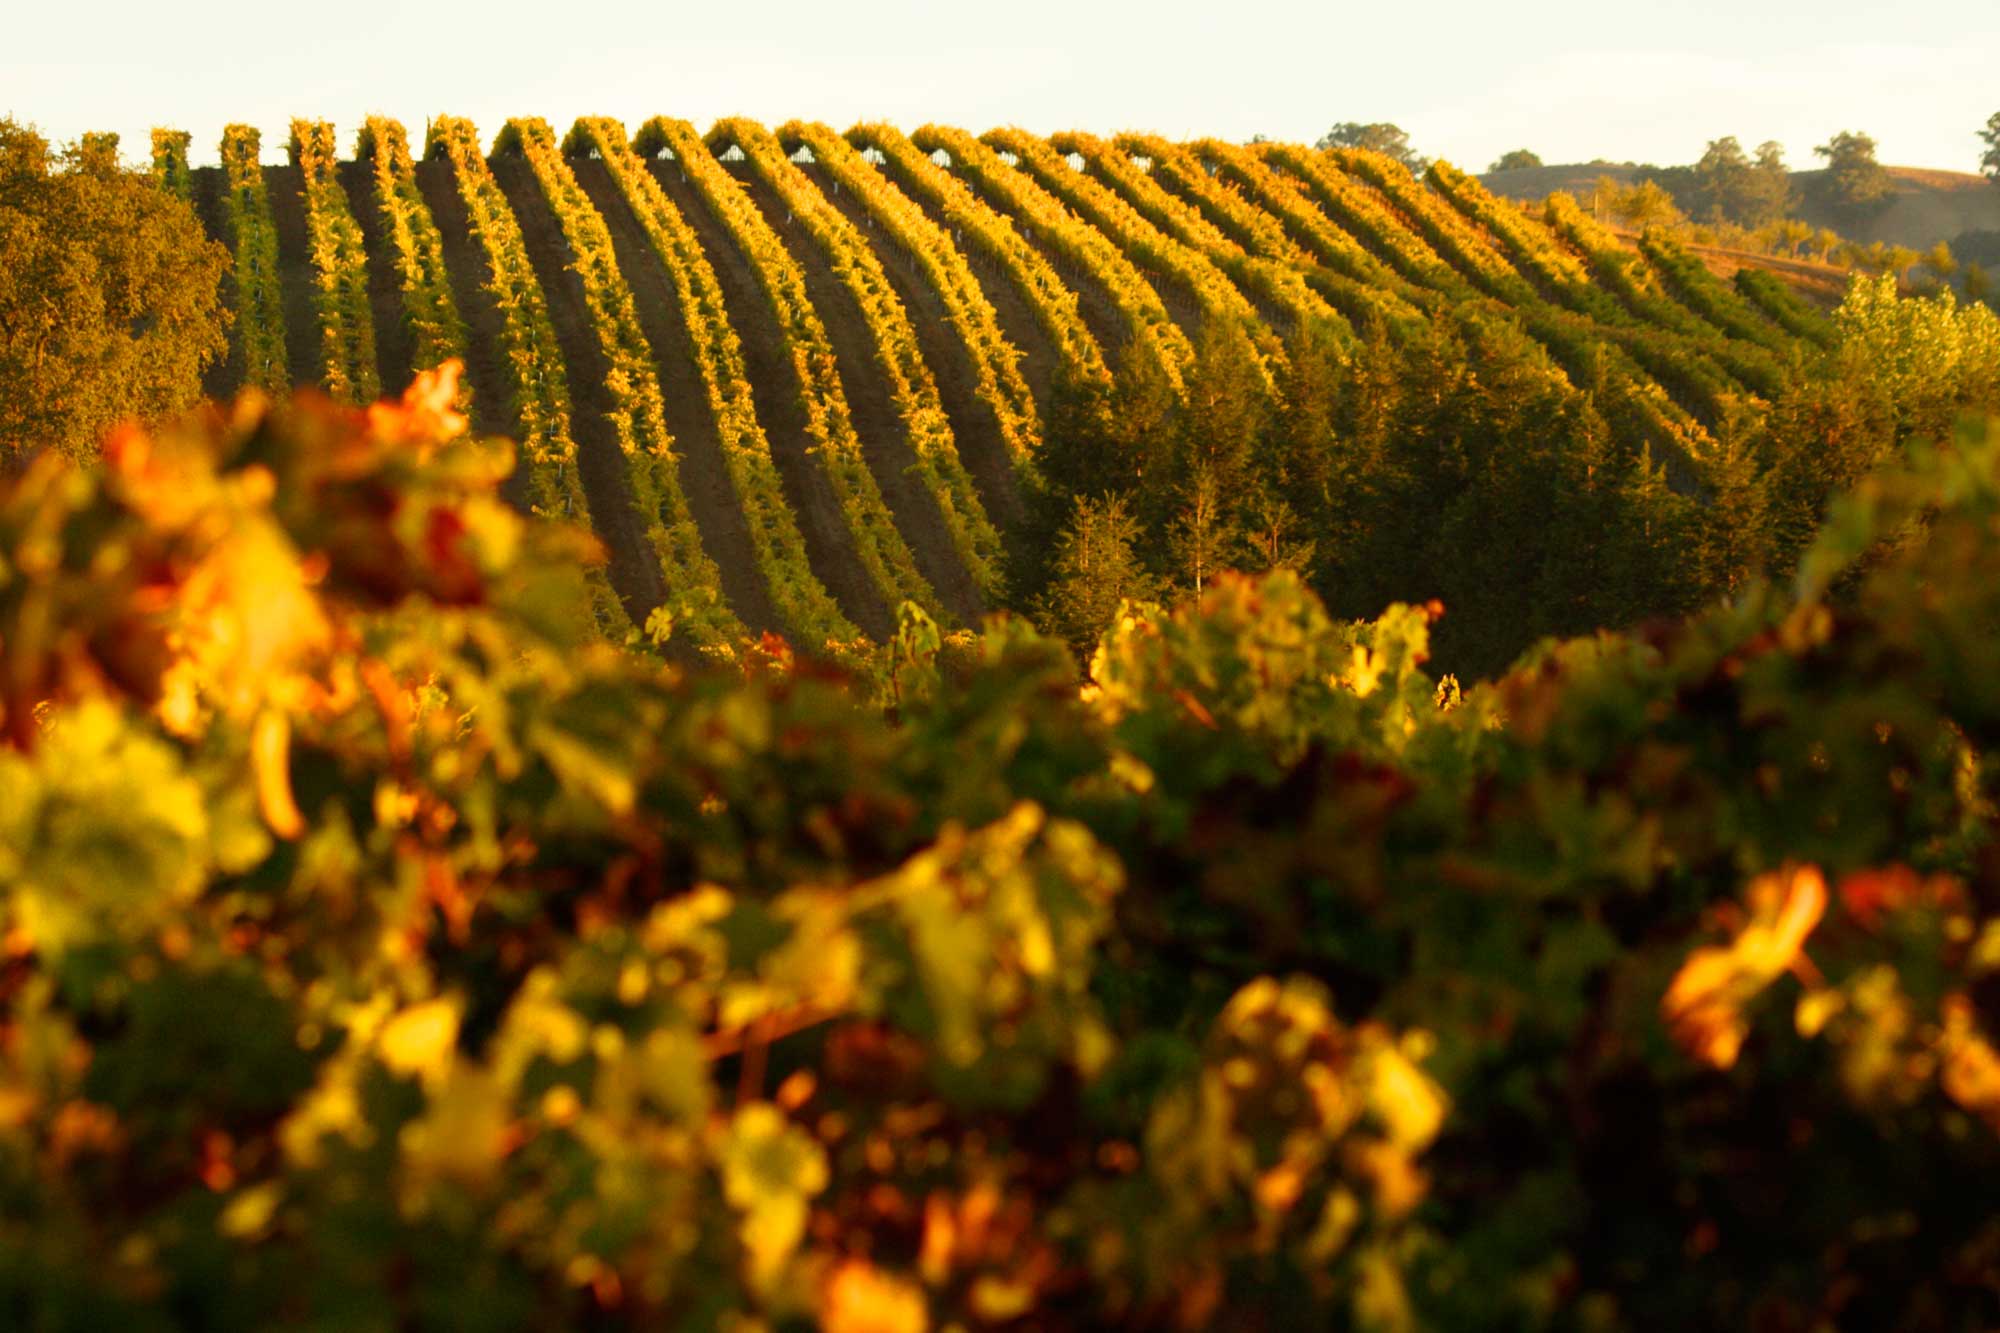 Sonoma County Vineyards